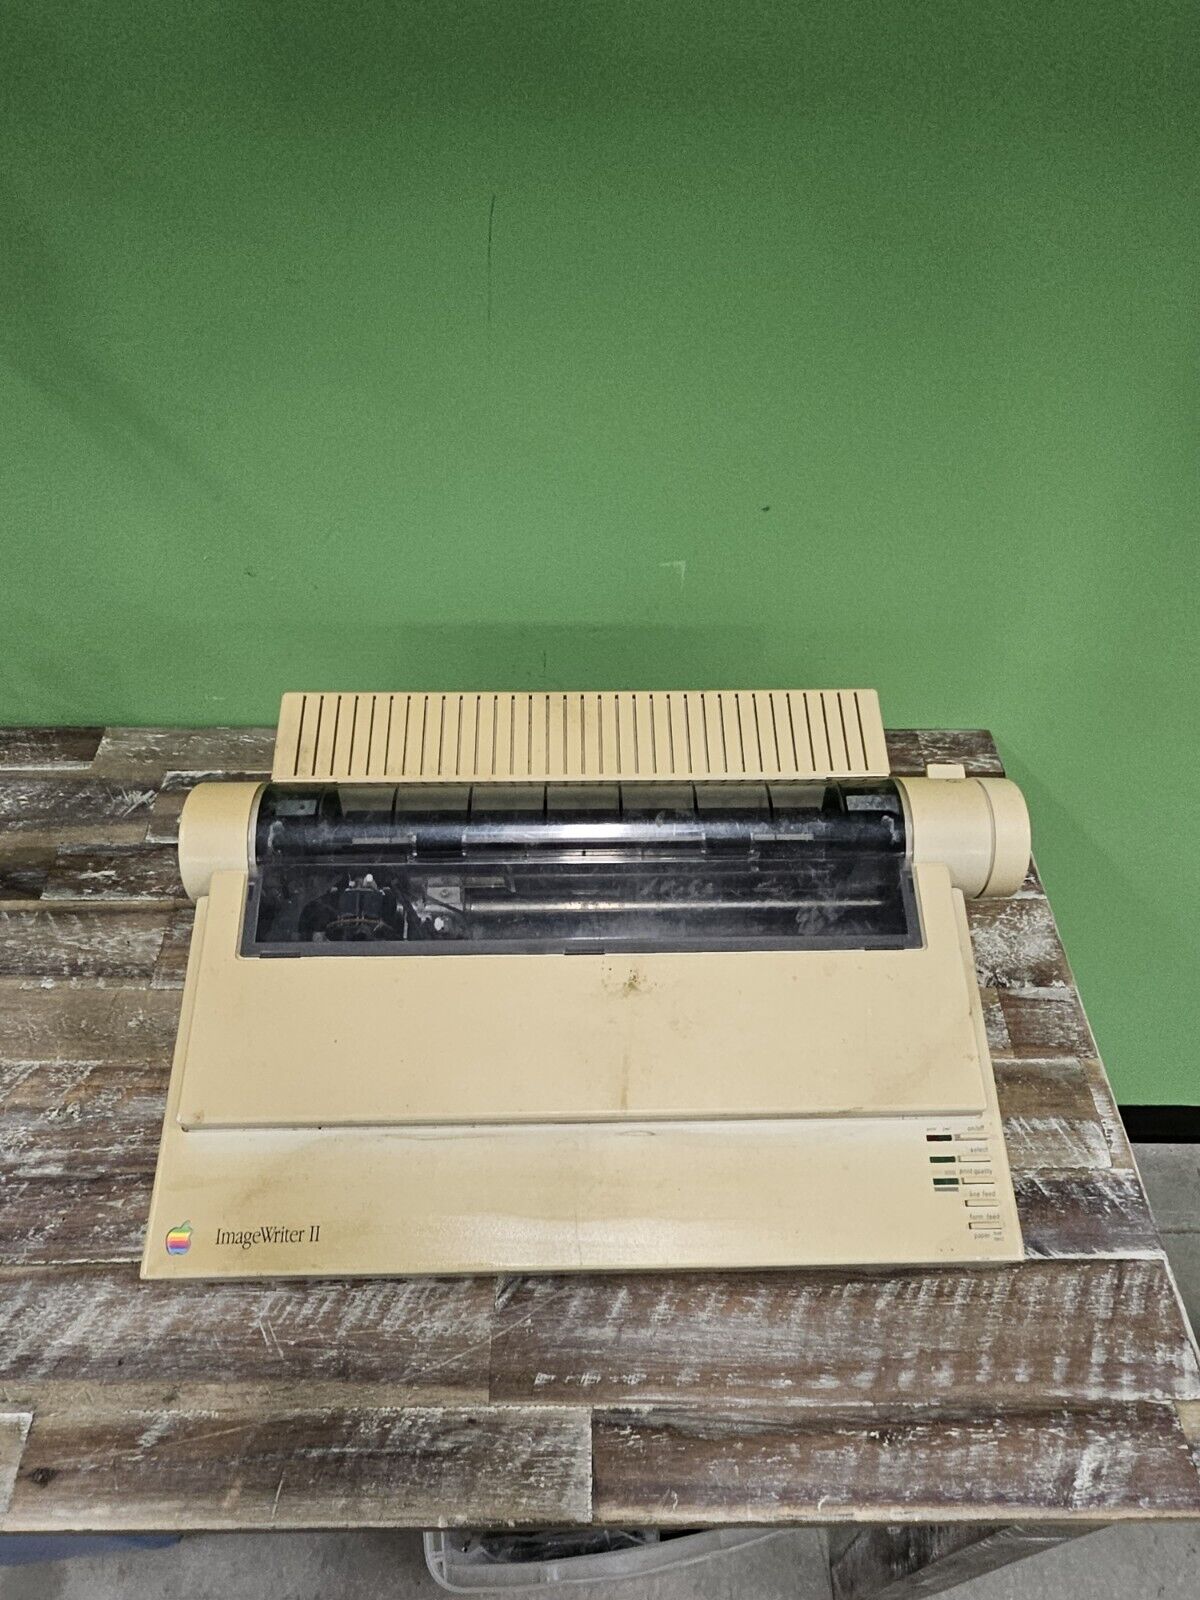 Vintage Apple Macintosh Imagewriter II Printer A9M0320